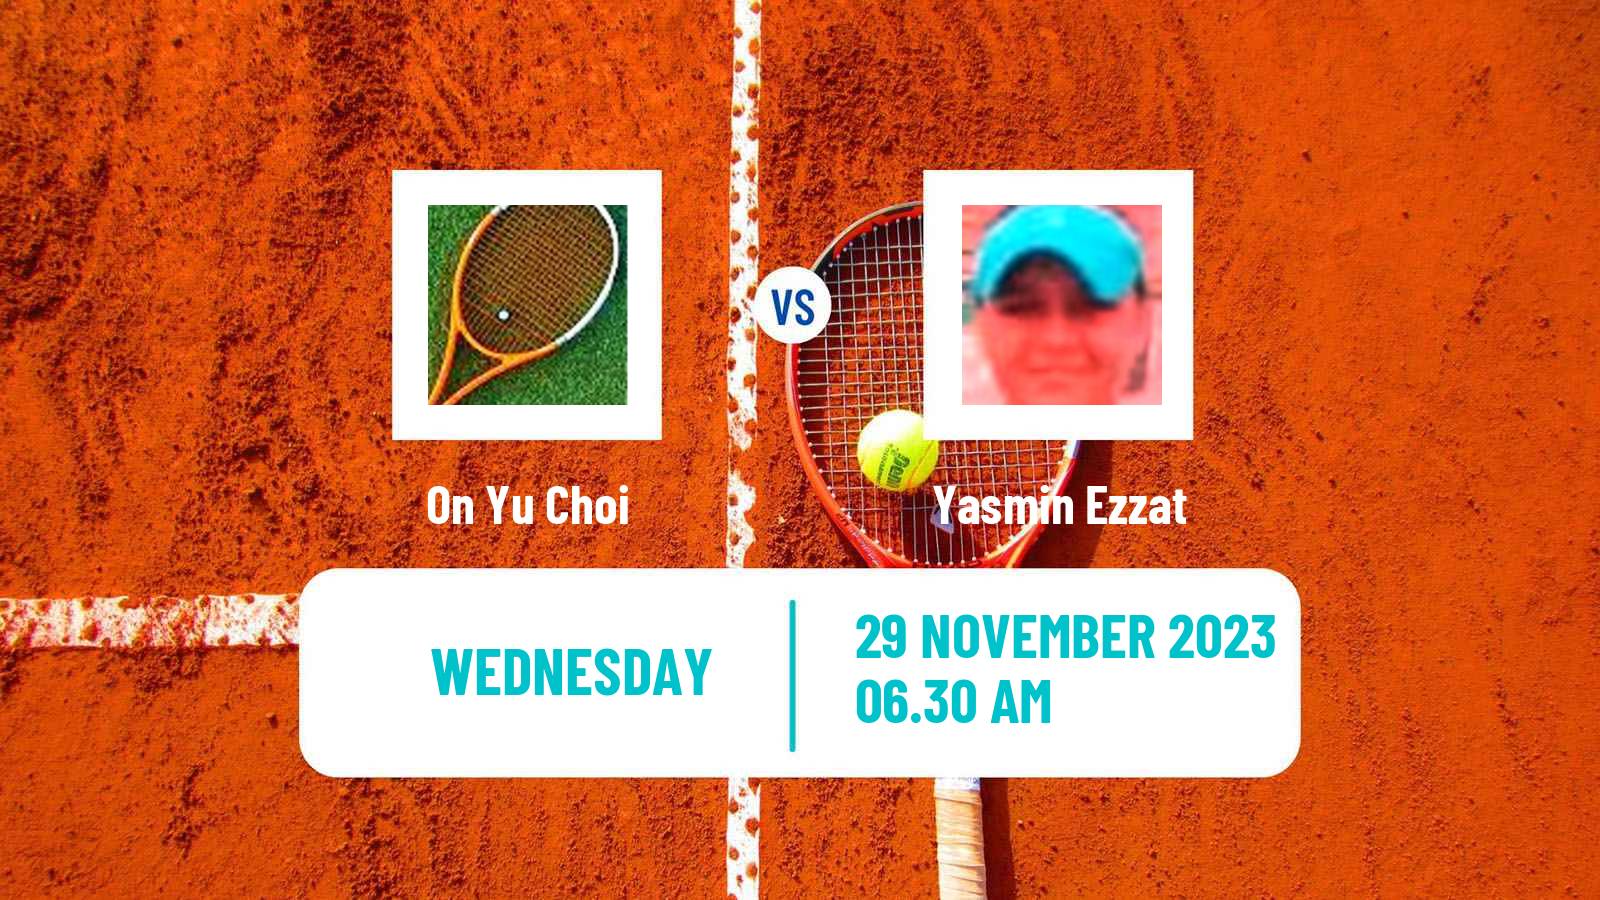 Tennis ITF W15 Sharm Elsheikh 22 Women 2023 On Yu Choi - Yasmin Ezzat